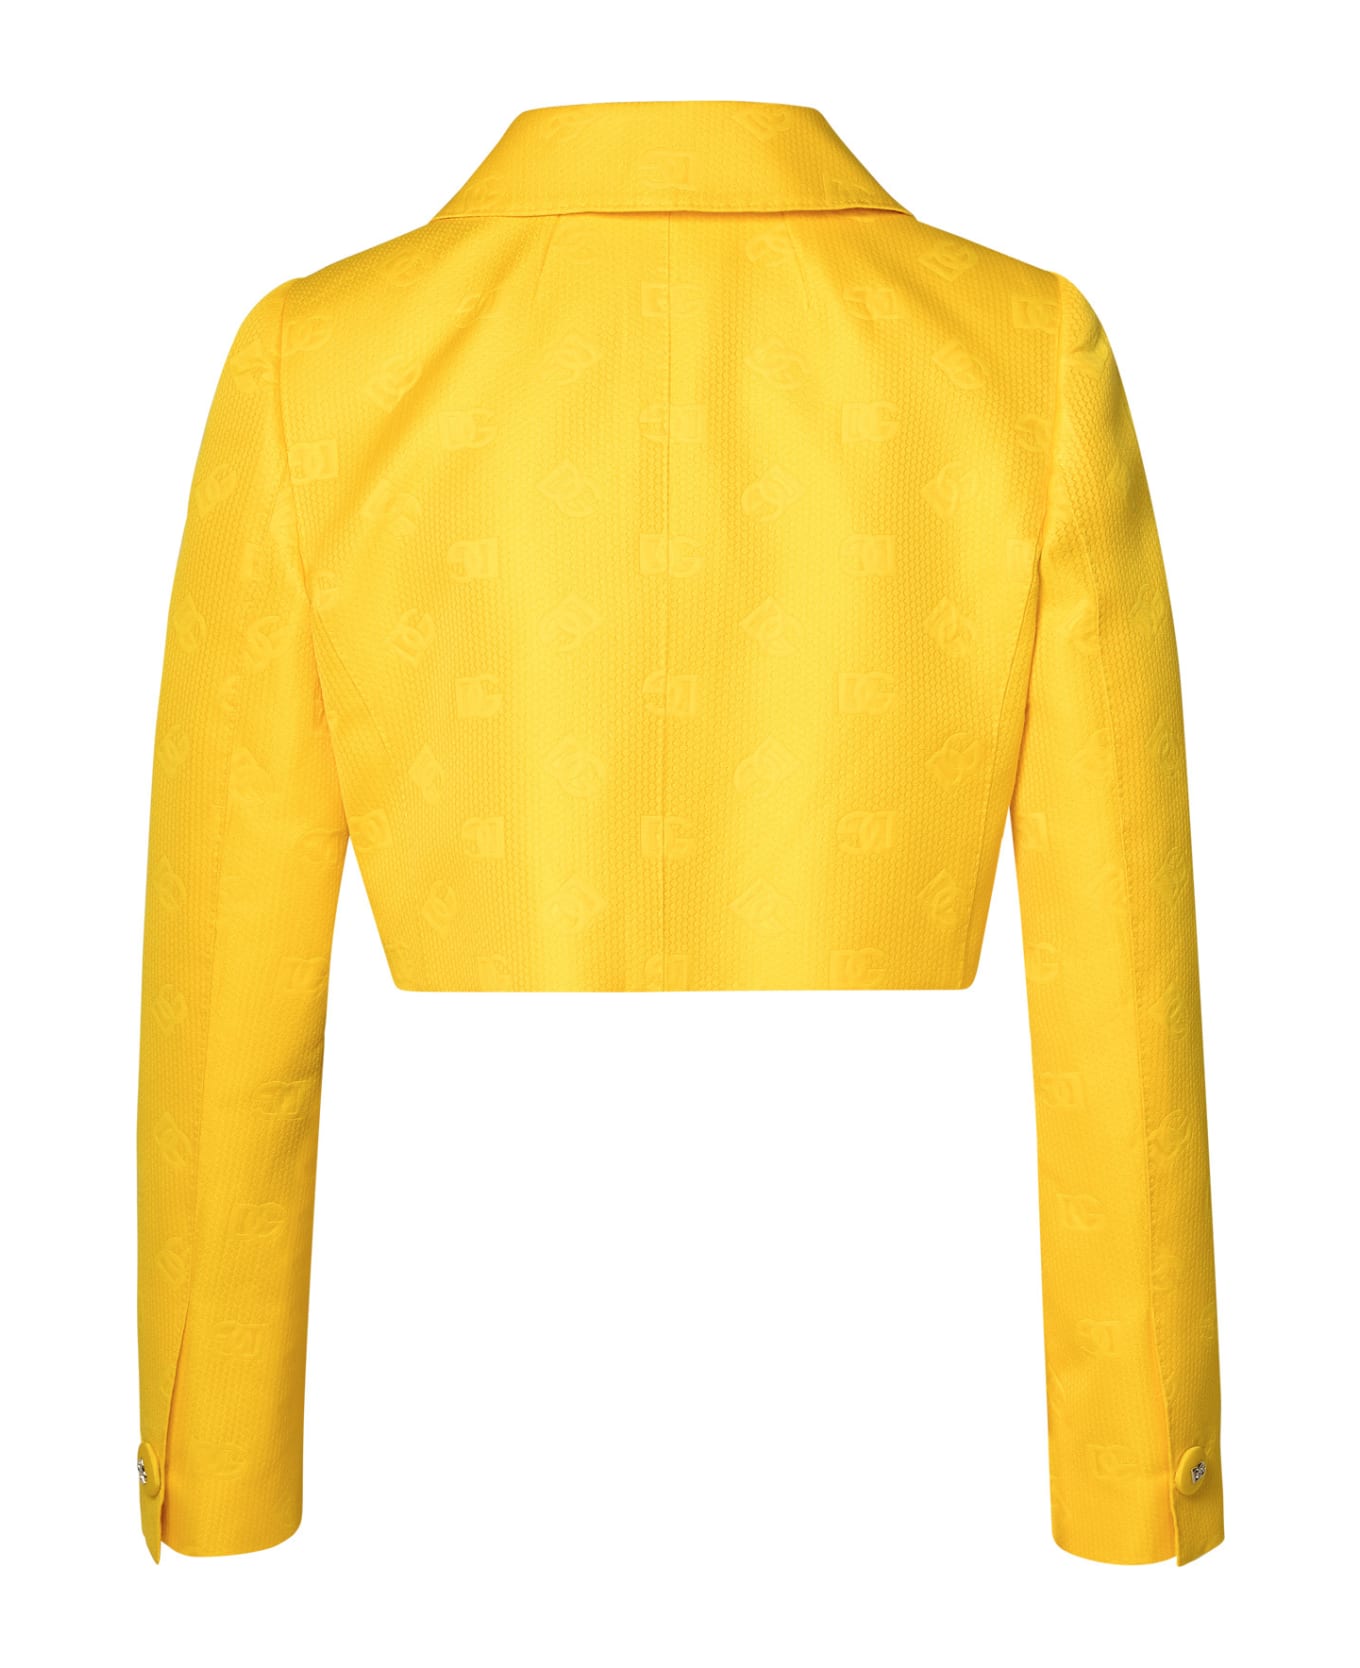 Dolce & Gabbana Yellow Cotton Blend Jacket - Yellow ジャケット